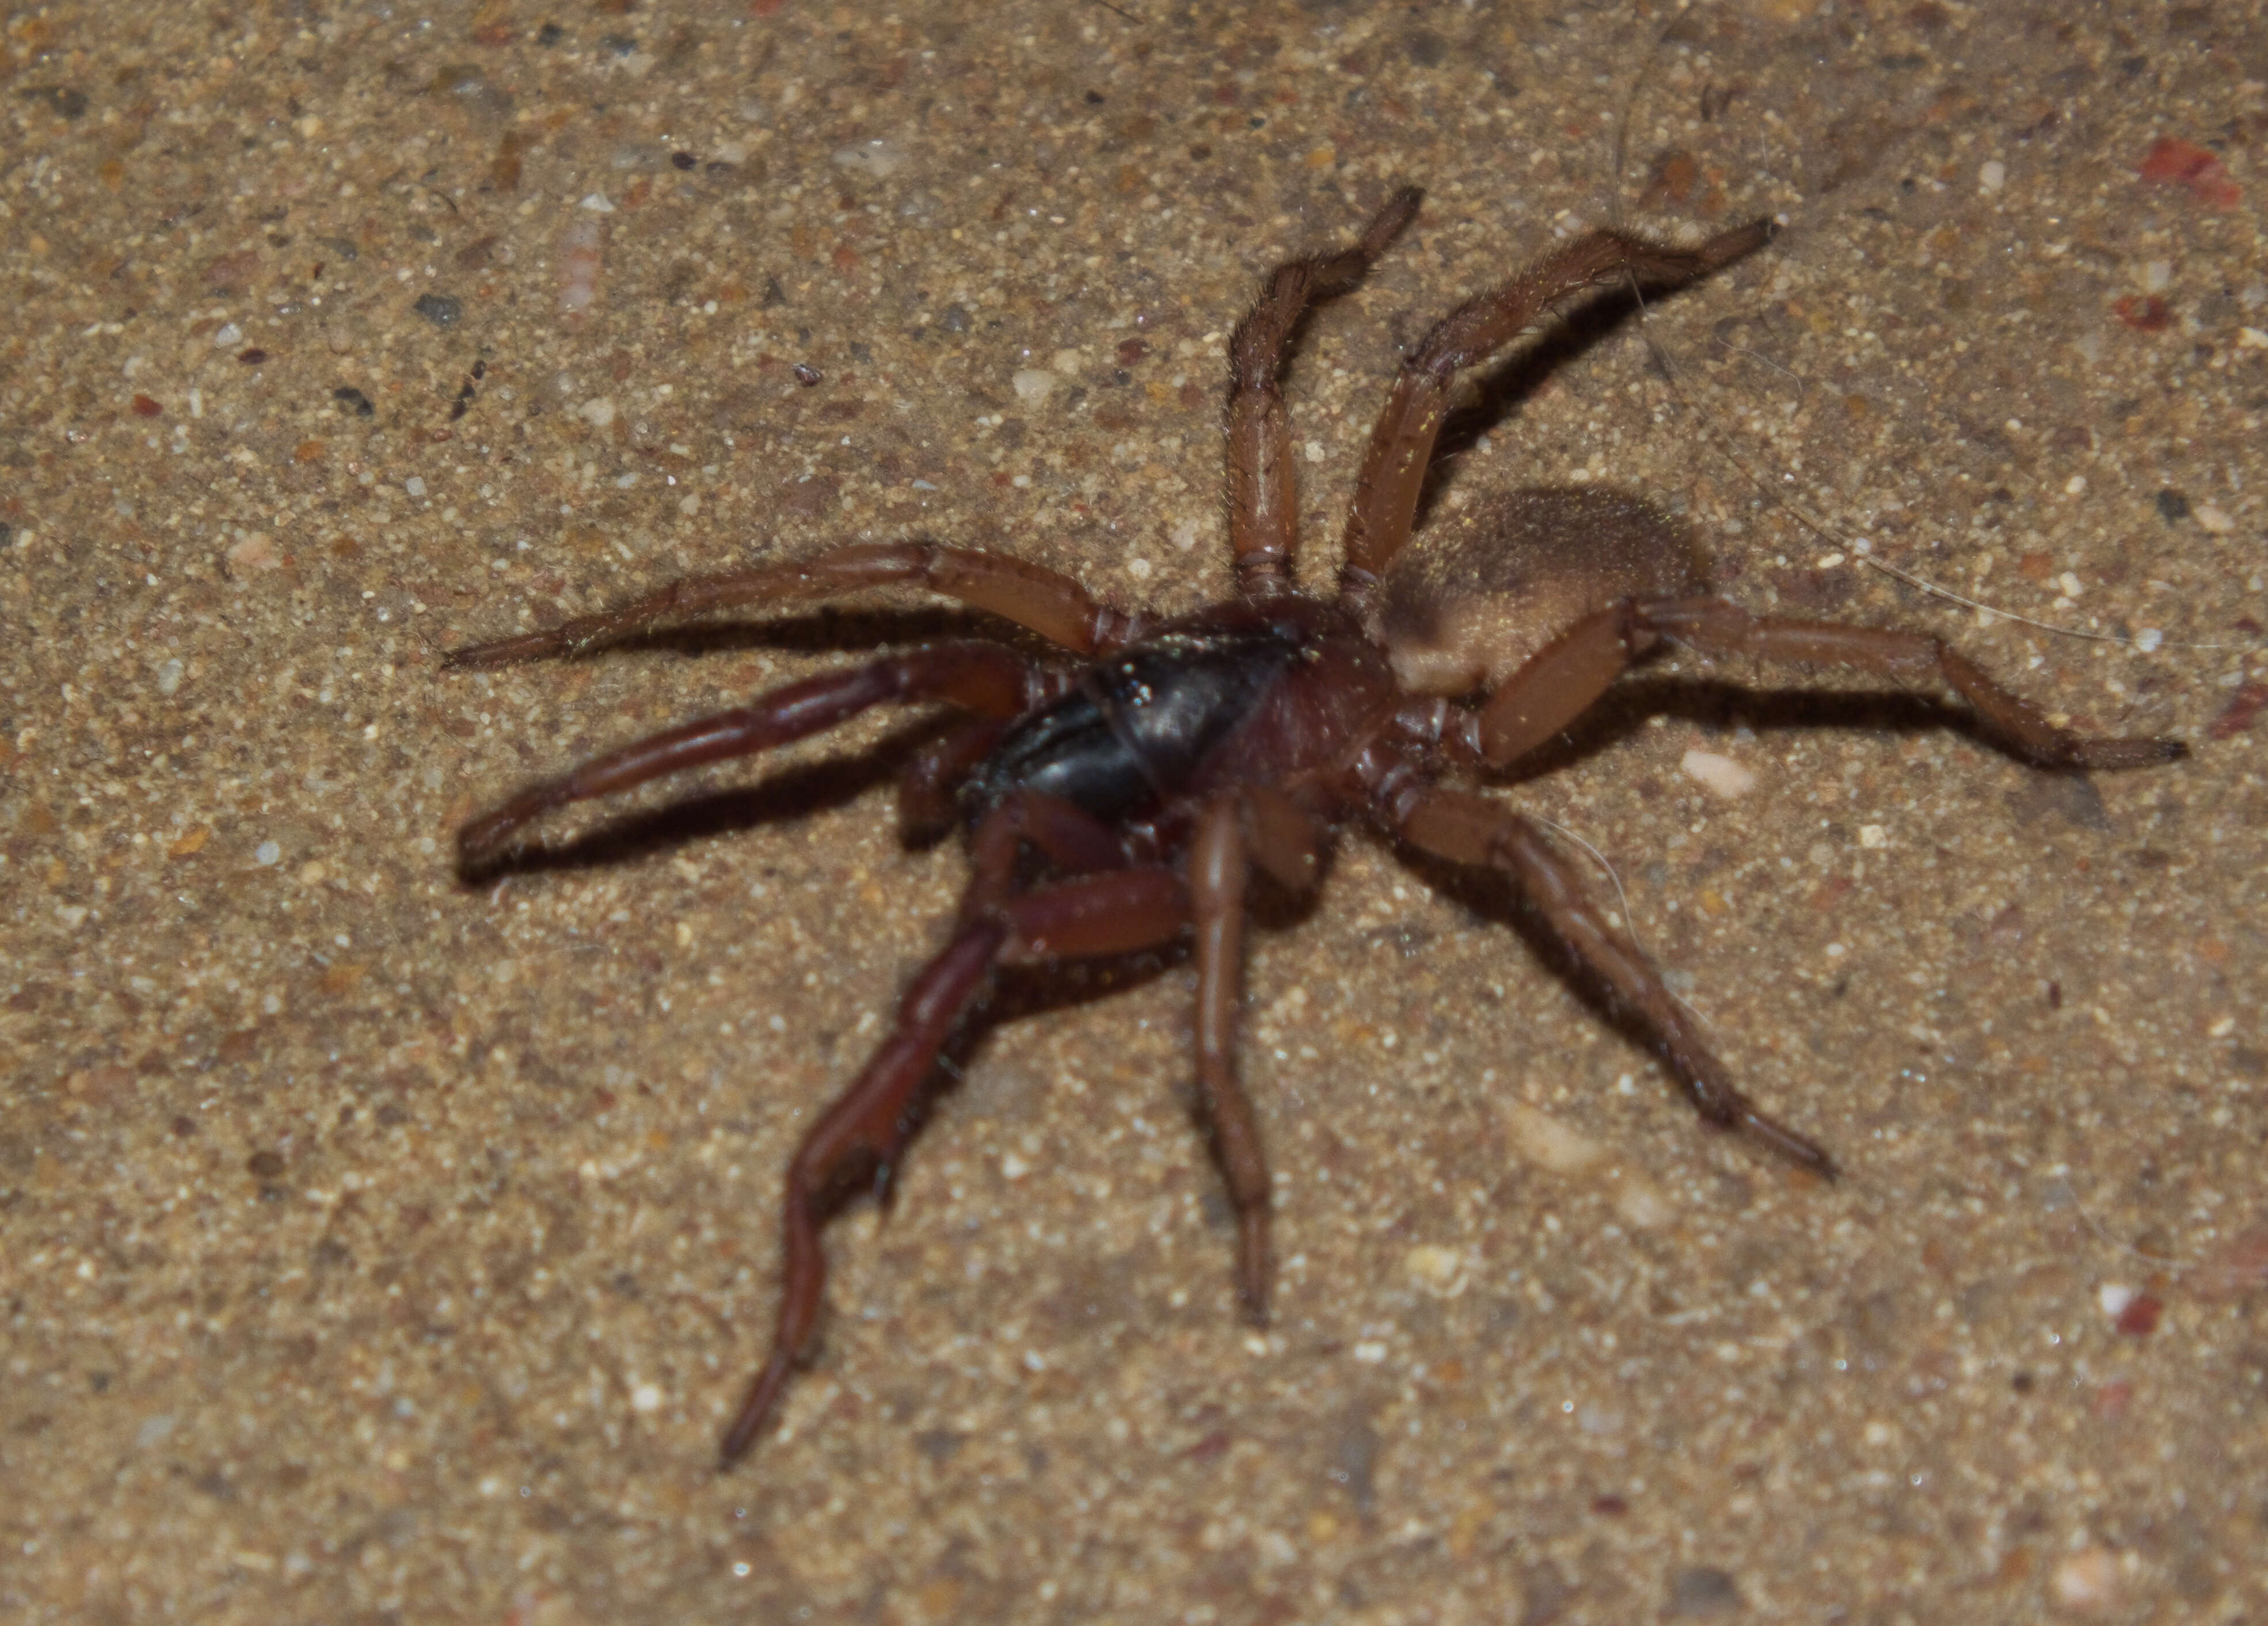 Image of nemesiid spiders